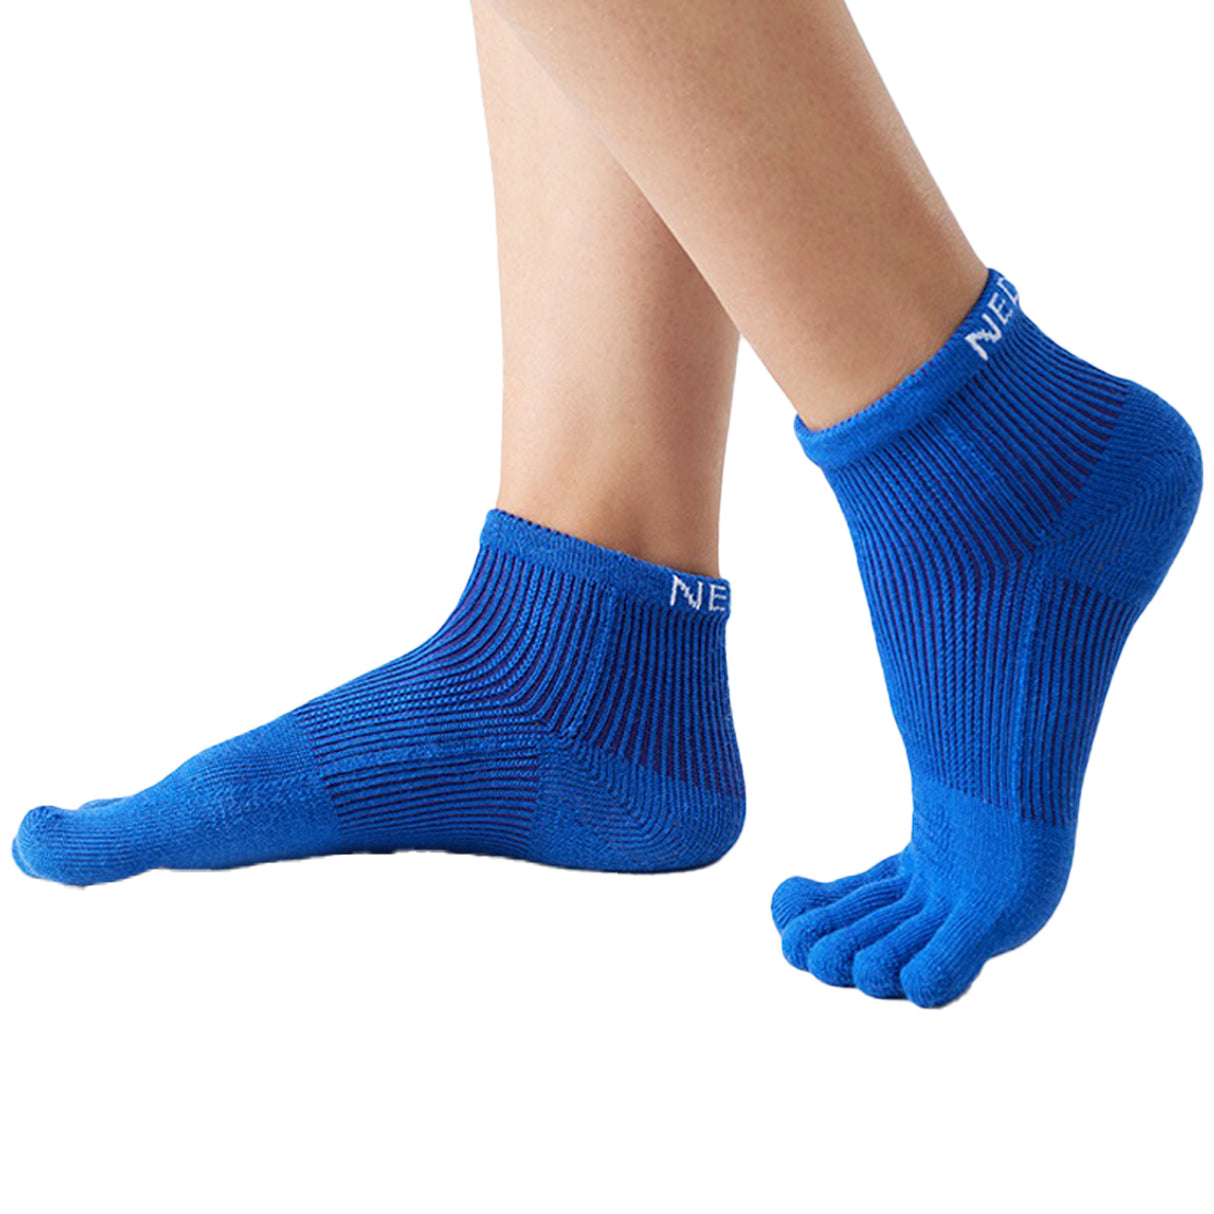 Nedao Merino Wool Compression Five-Finger Running Socks